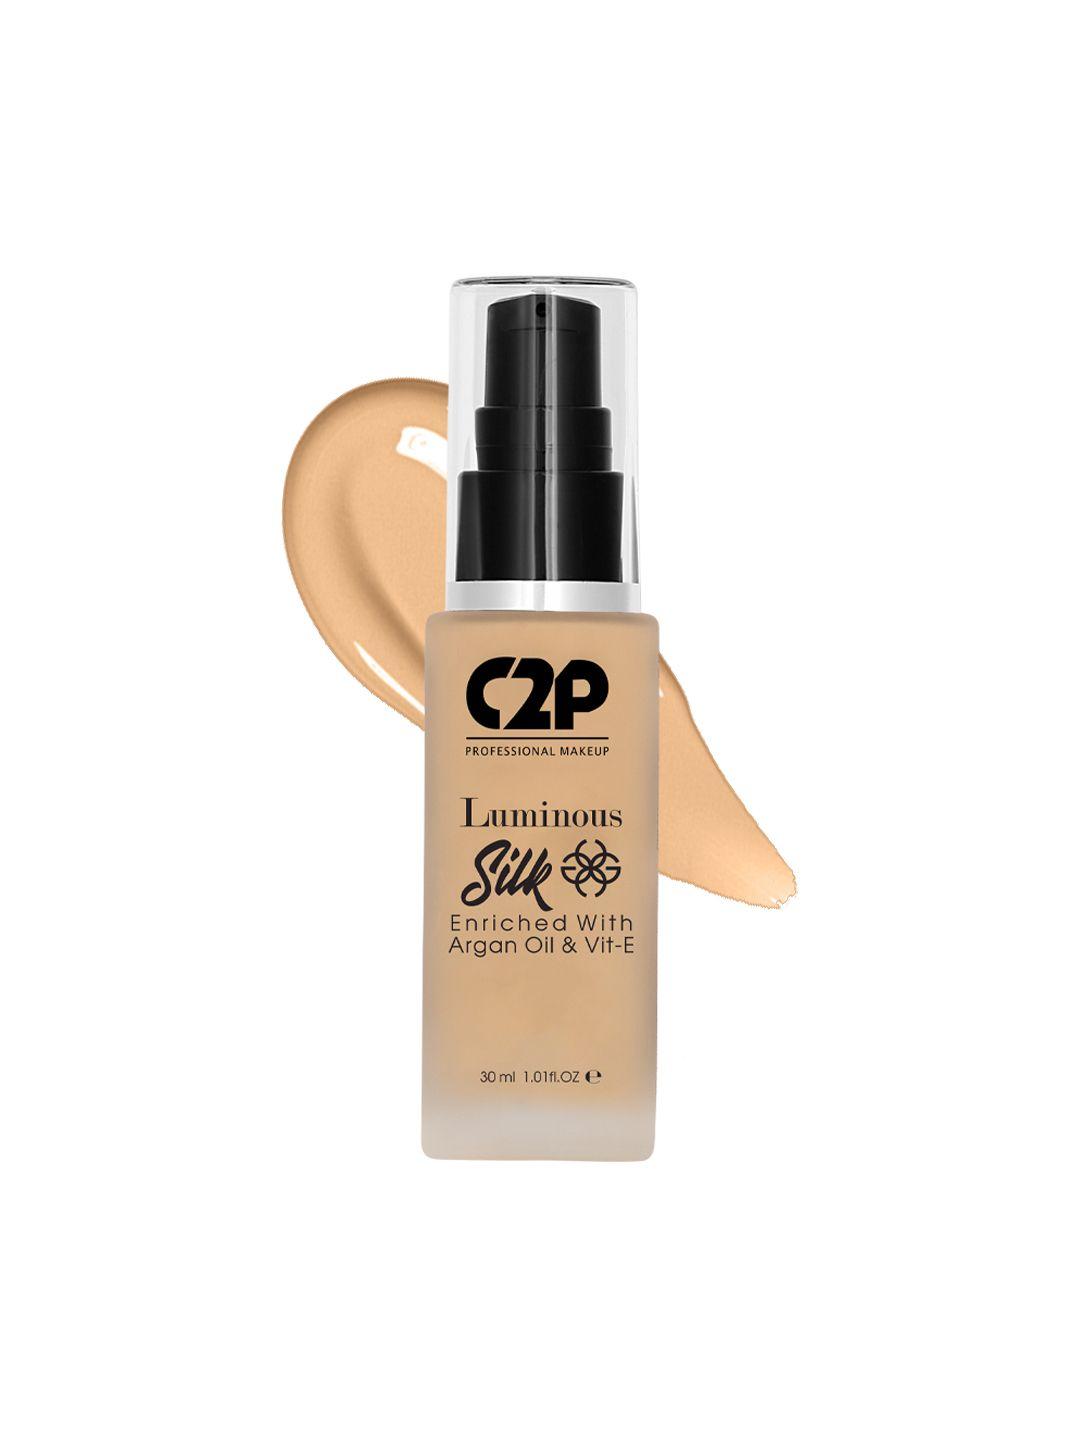 c2p professional makeup luminous silk liquid foundation with argan oil - medium tan 07